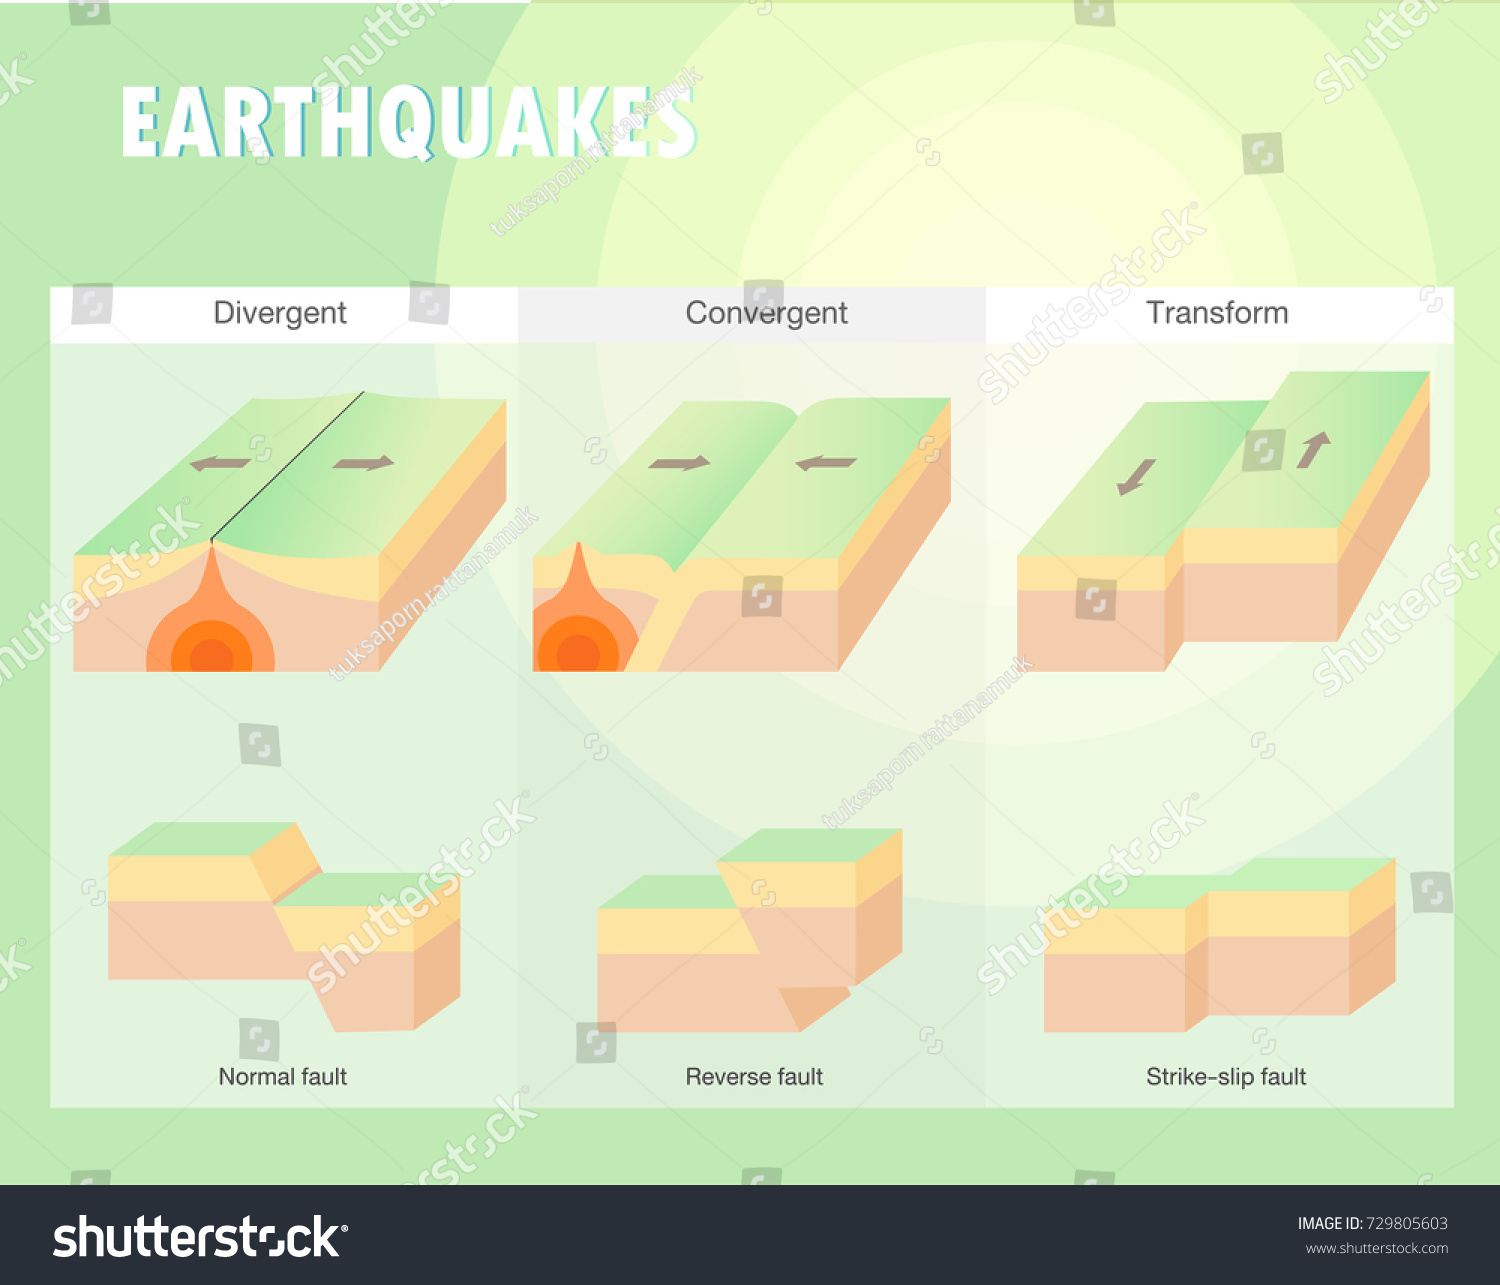 270 Tectonic plate movement Images, Stock Photos & Vectors | Shutterstock